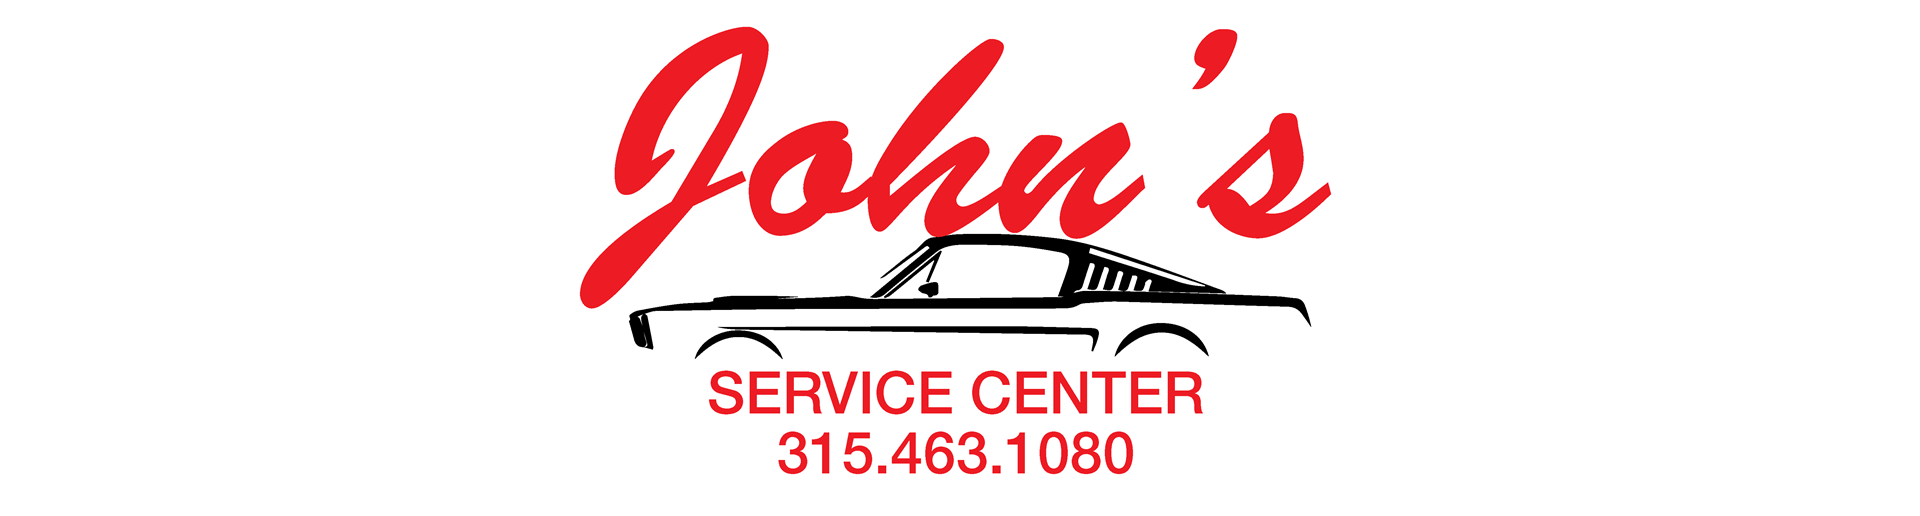 Welcome John's Service Center